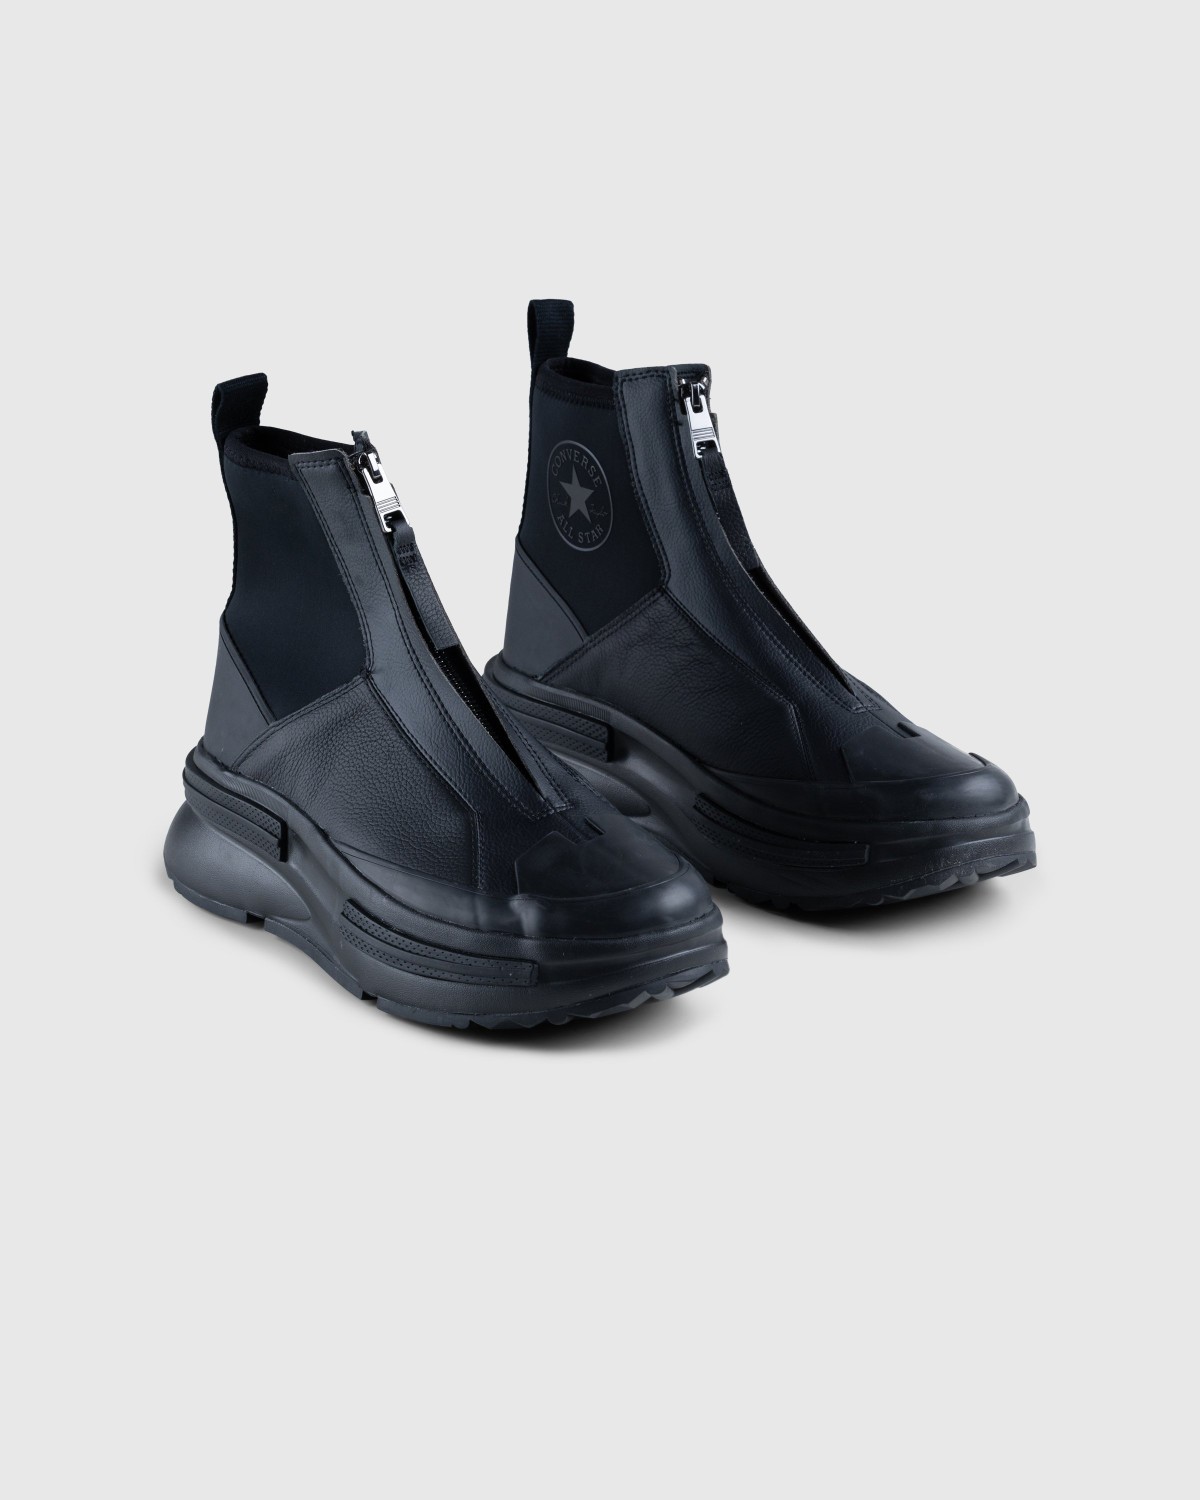 Converse – Run Star Legacy Chelsea Boot CX Black | Highsnobiety Shop